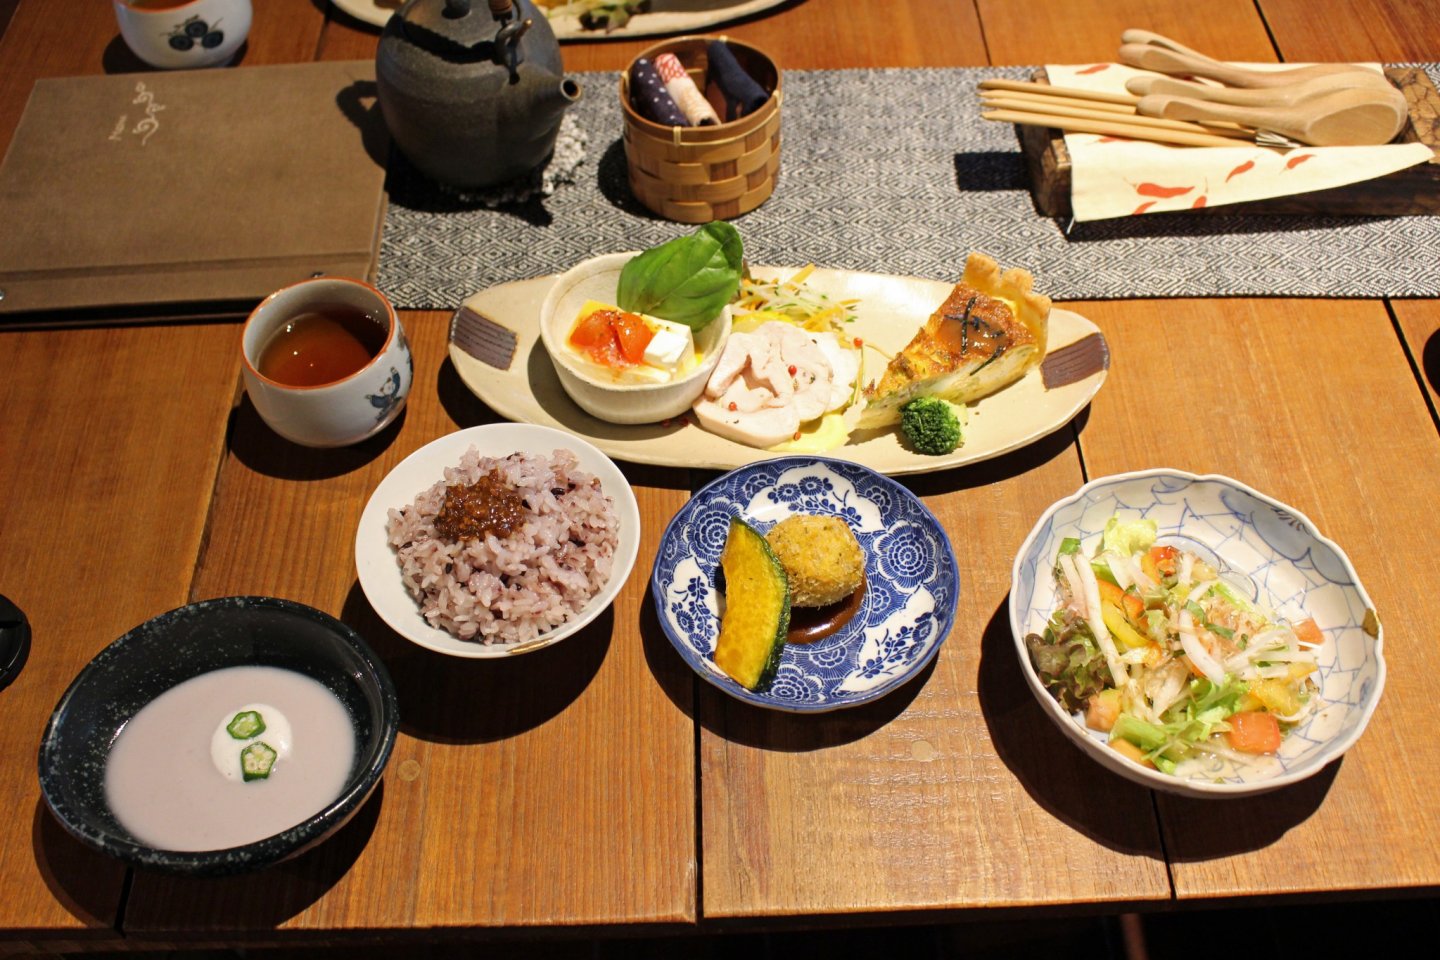 Kotodama Cafe's lunch spread